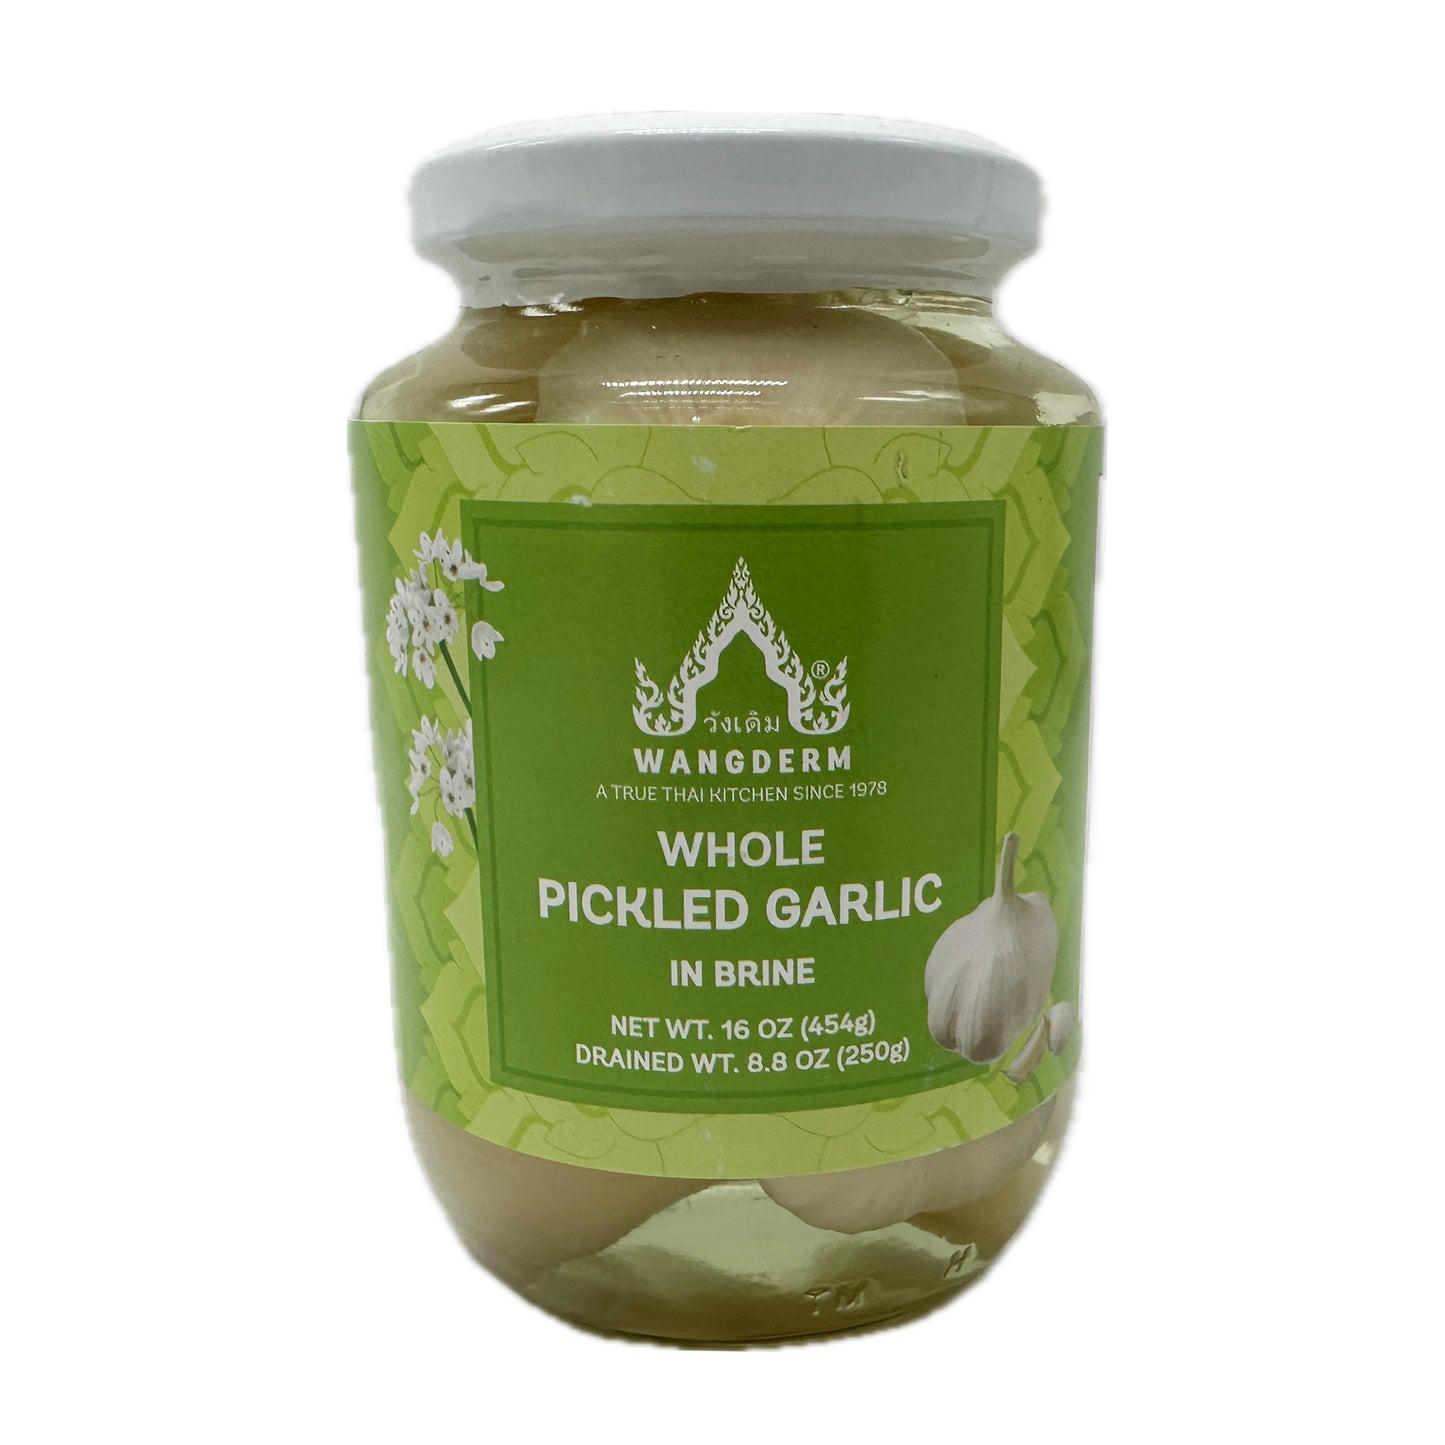 Whole Pickled Garlic in Brine by Wangderm กระเทียมดอง ตราวังเดิม - 16oz